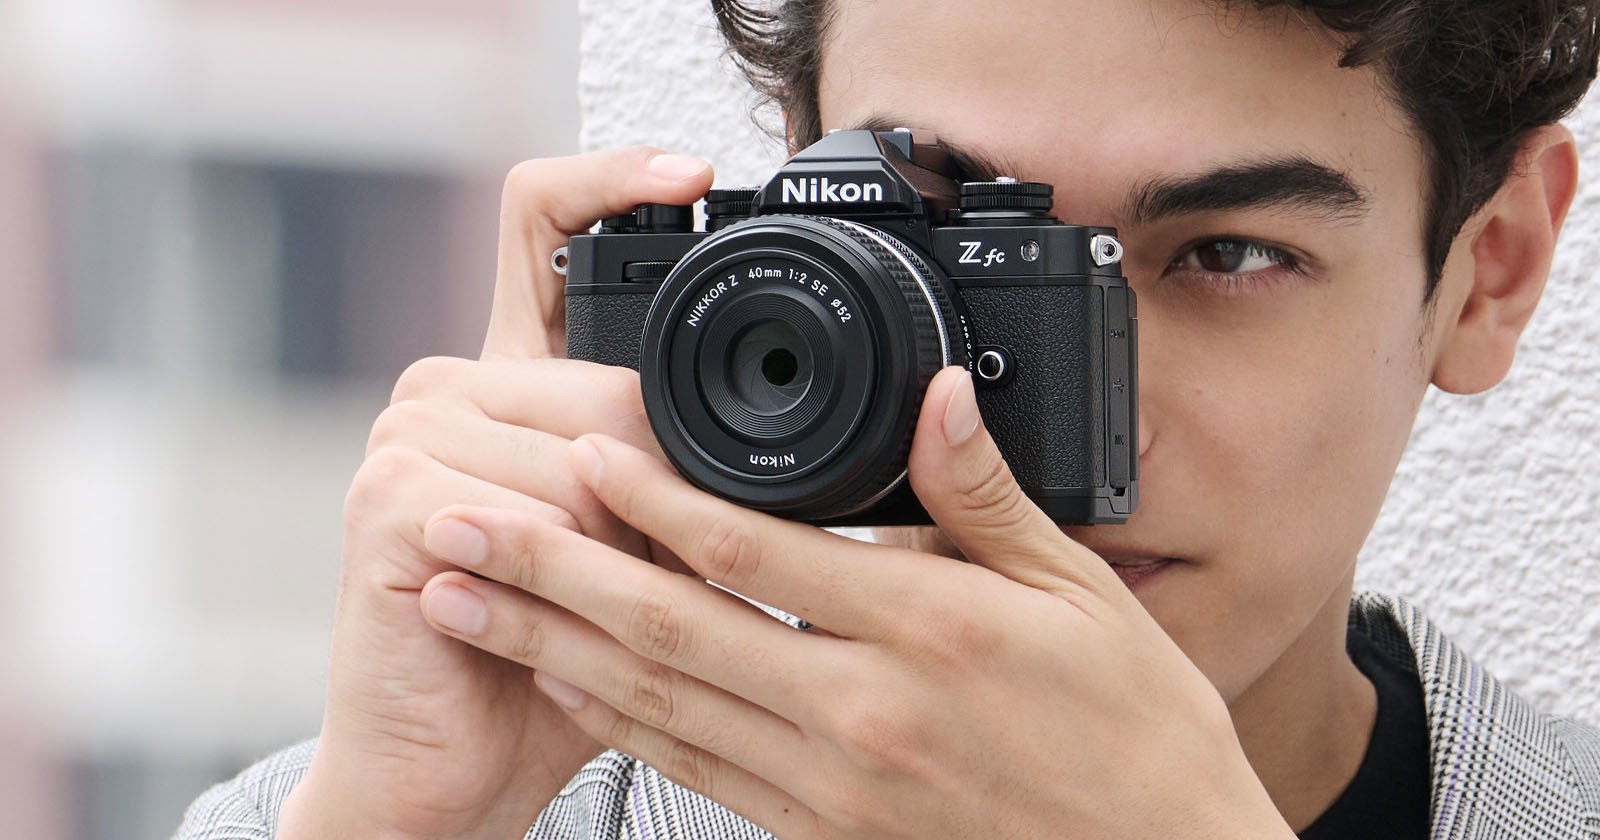  nikon goes retro special edition 40mm lens 